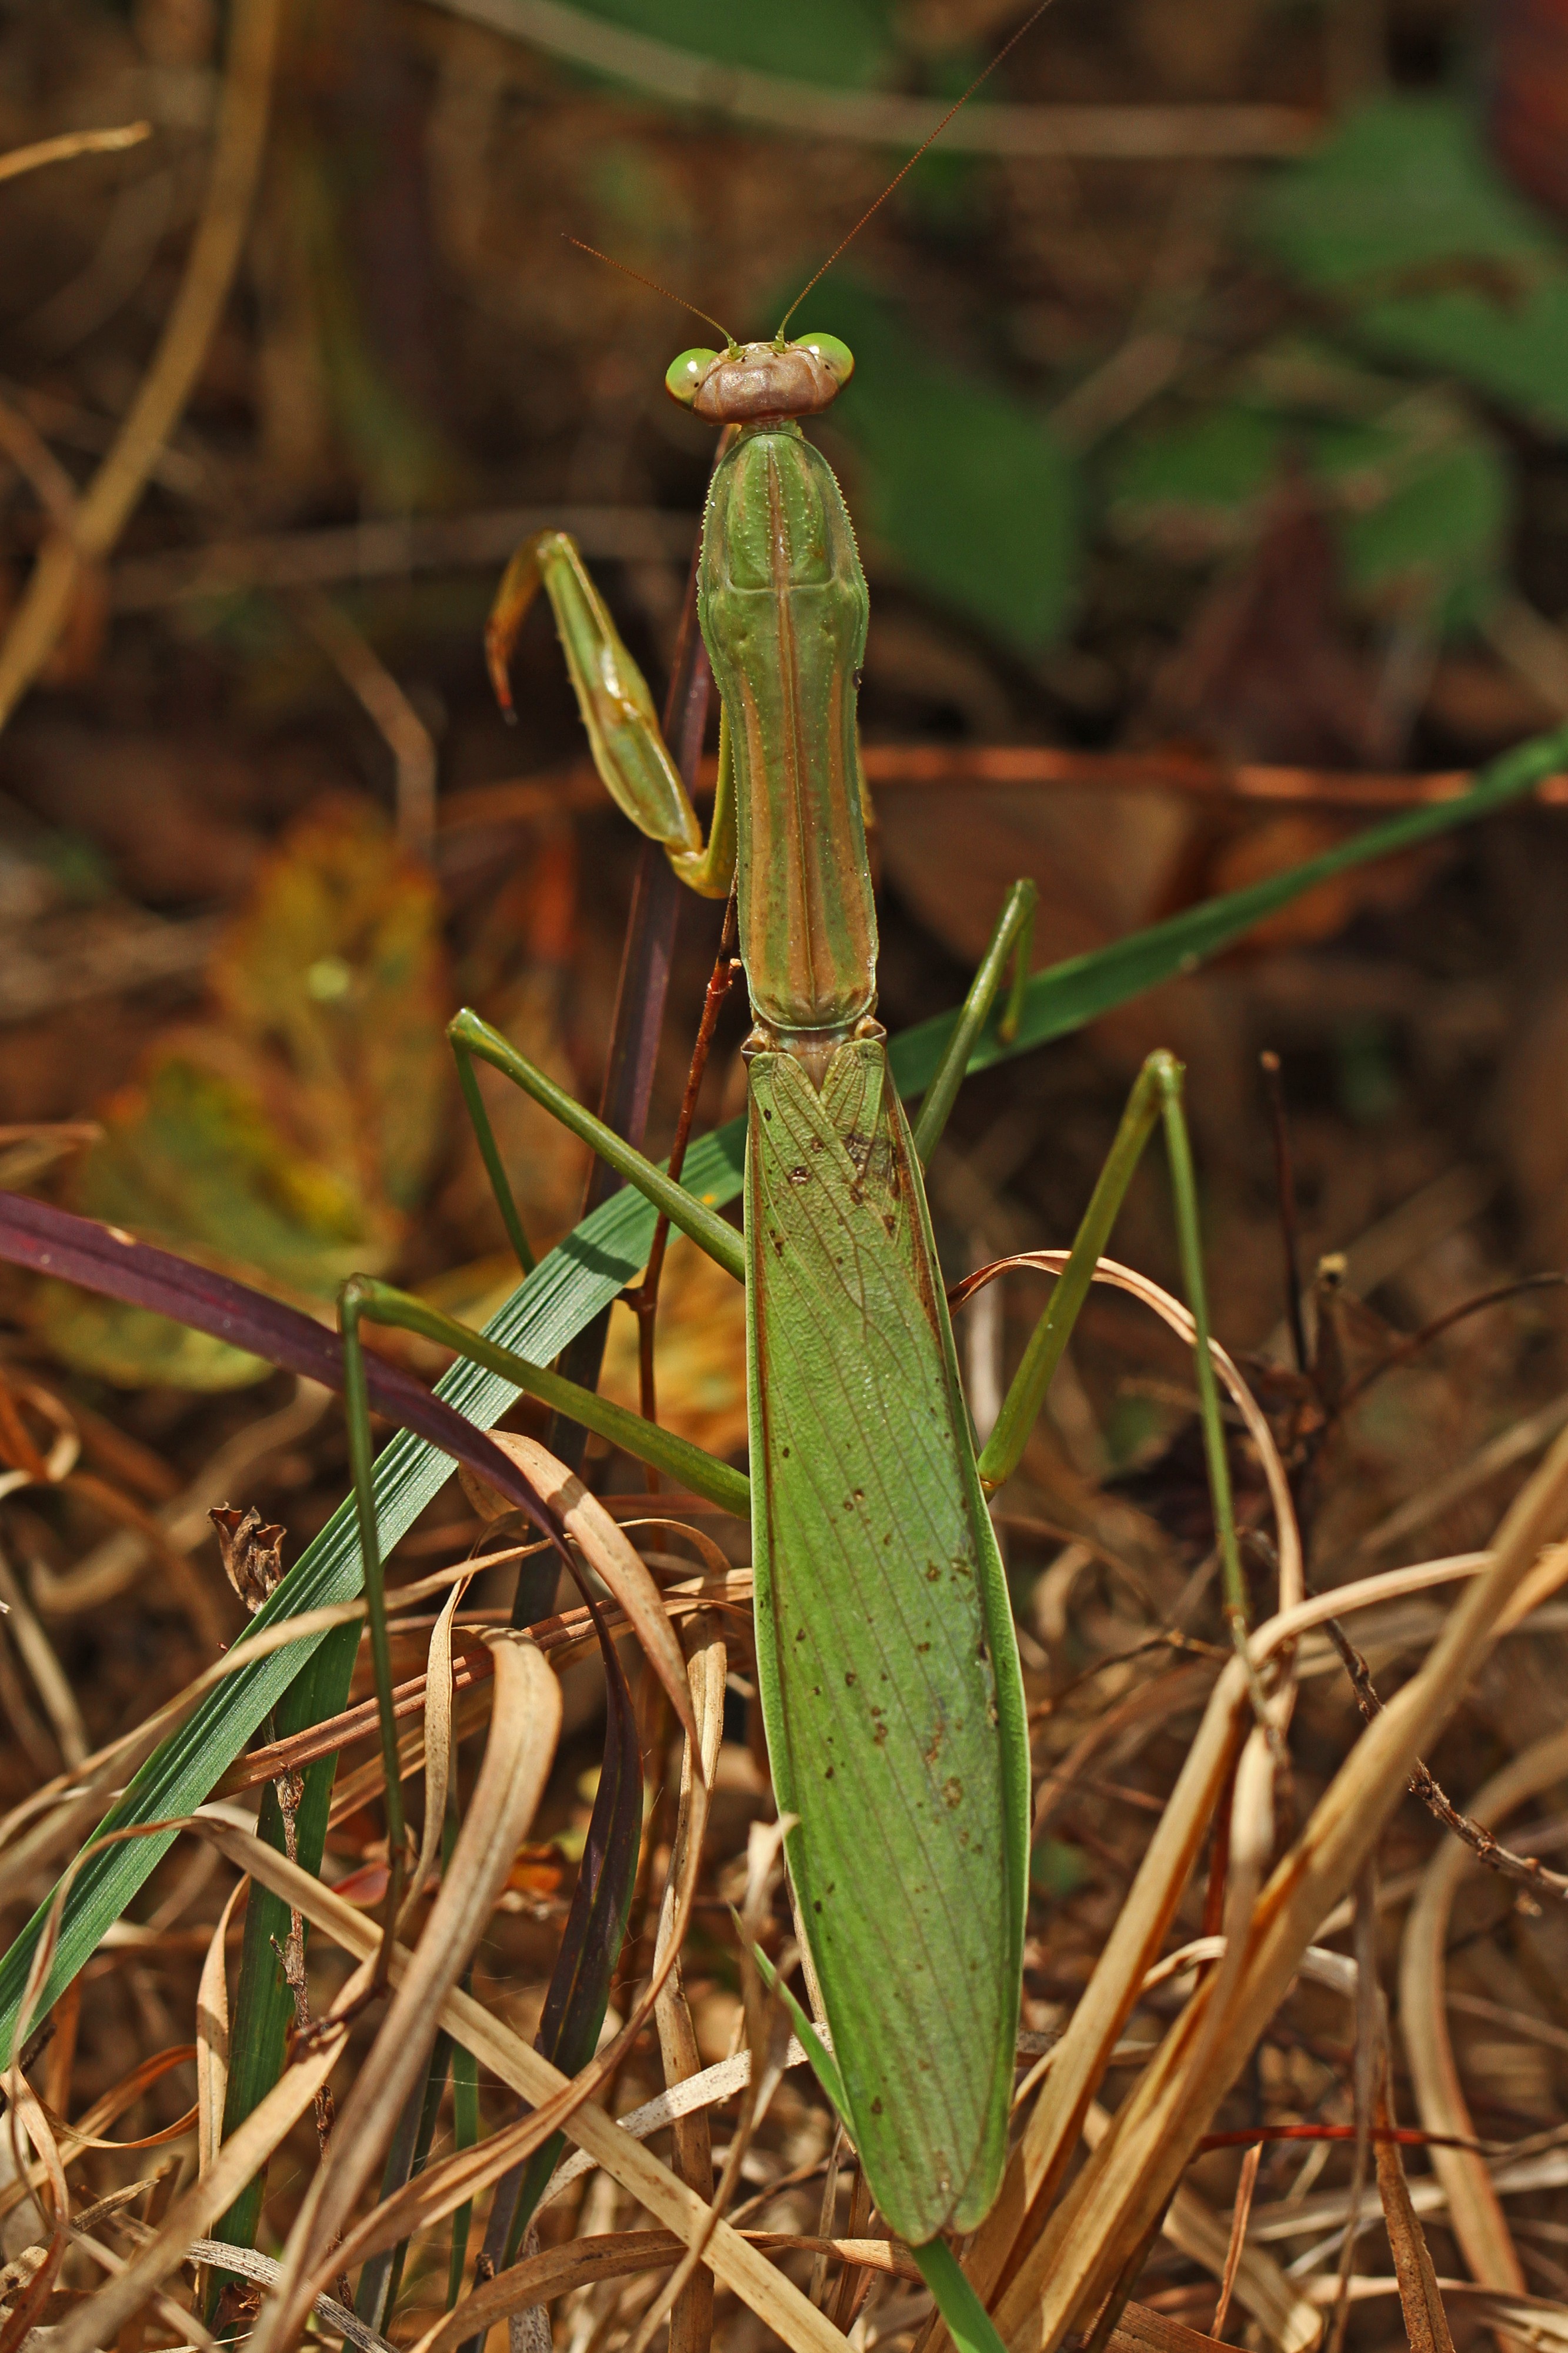 Chinese Mantis - Tenodera aridifolia, Julie Metz Wetlands, Woodbridge, Virginia